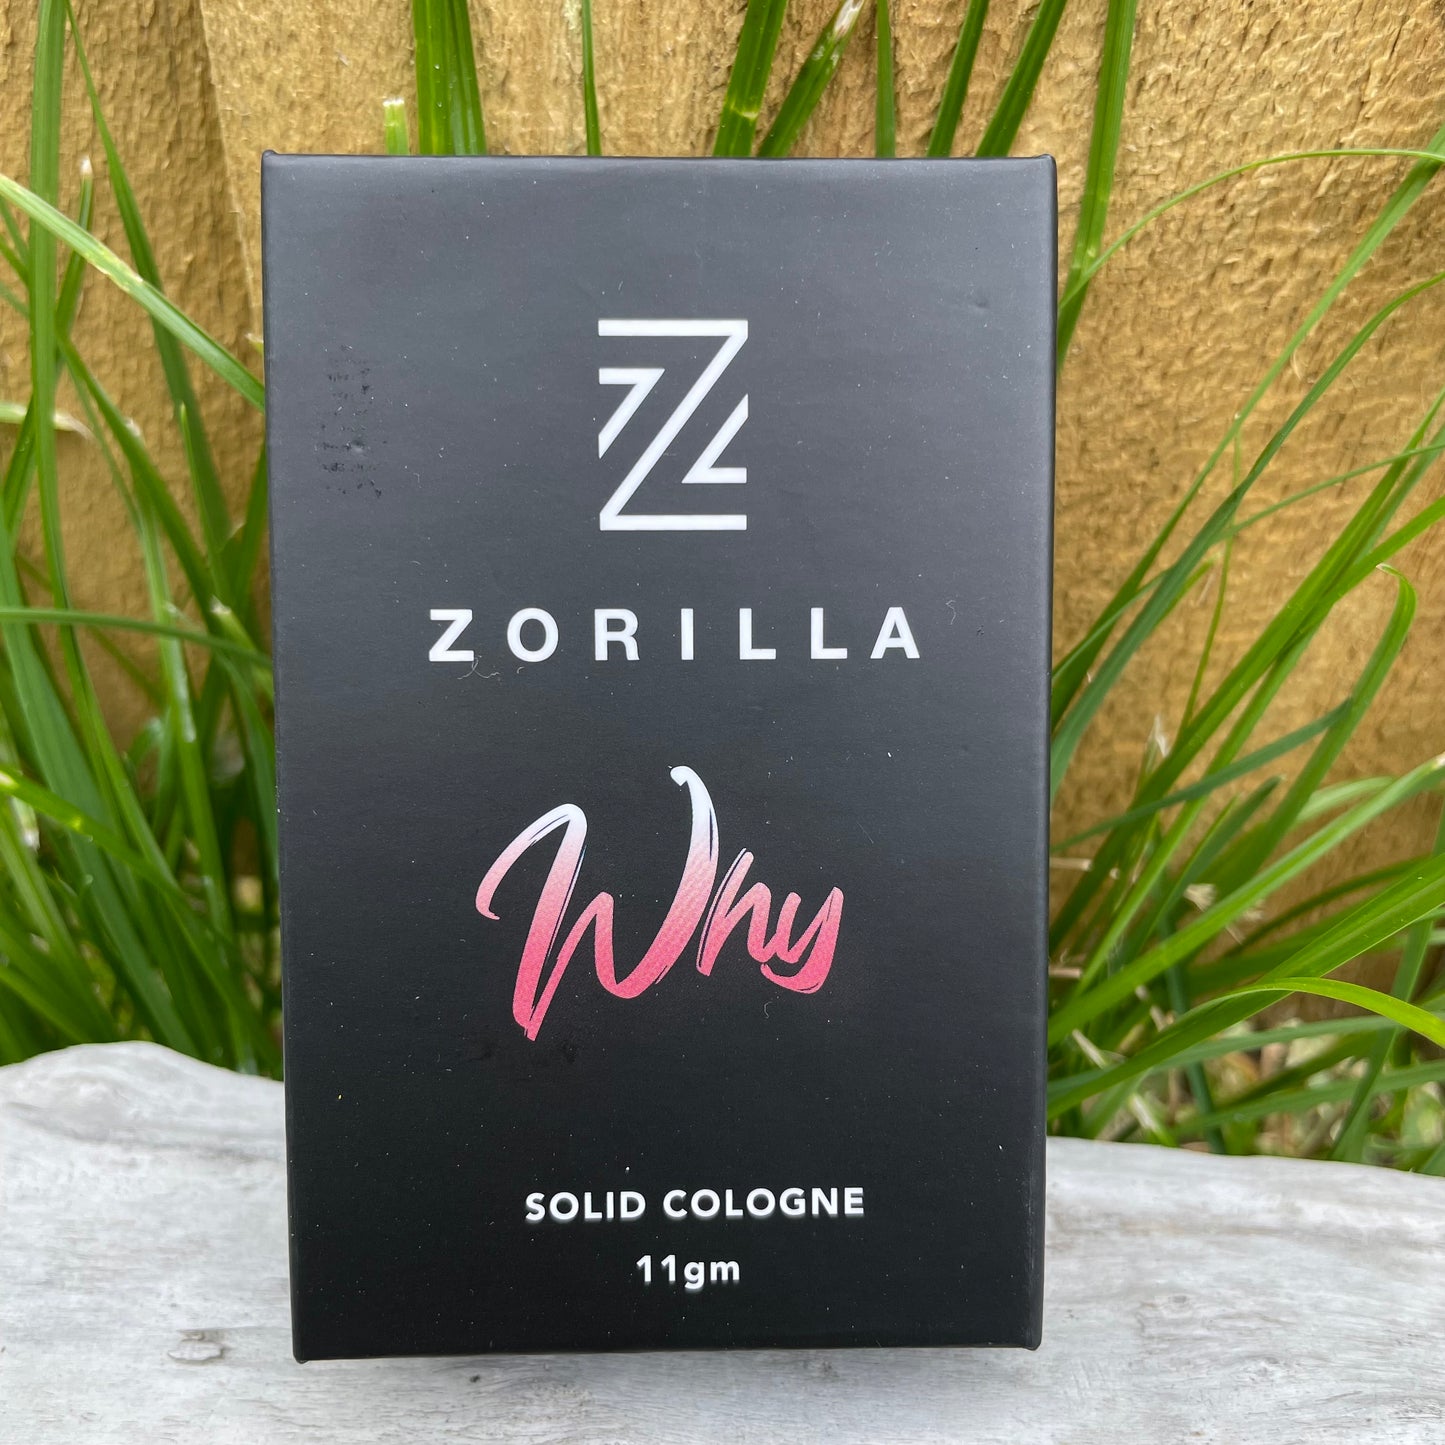 Zorilla men's solid cologne. Fragrance - Why